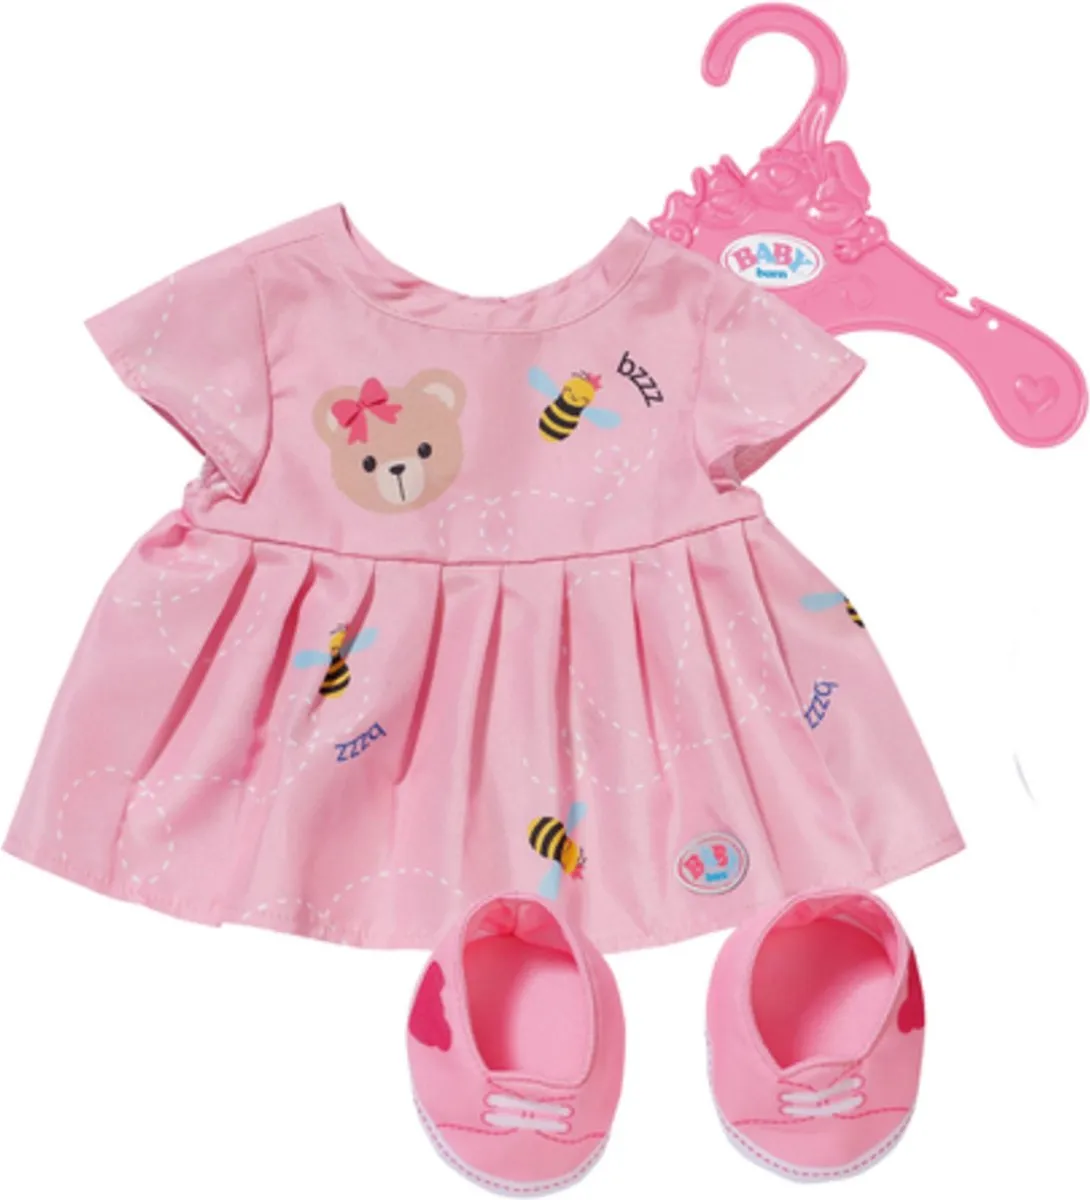 BABY born Beer Jurk en outfit - Roze speelgoed